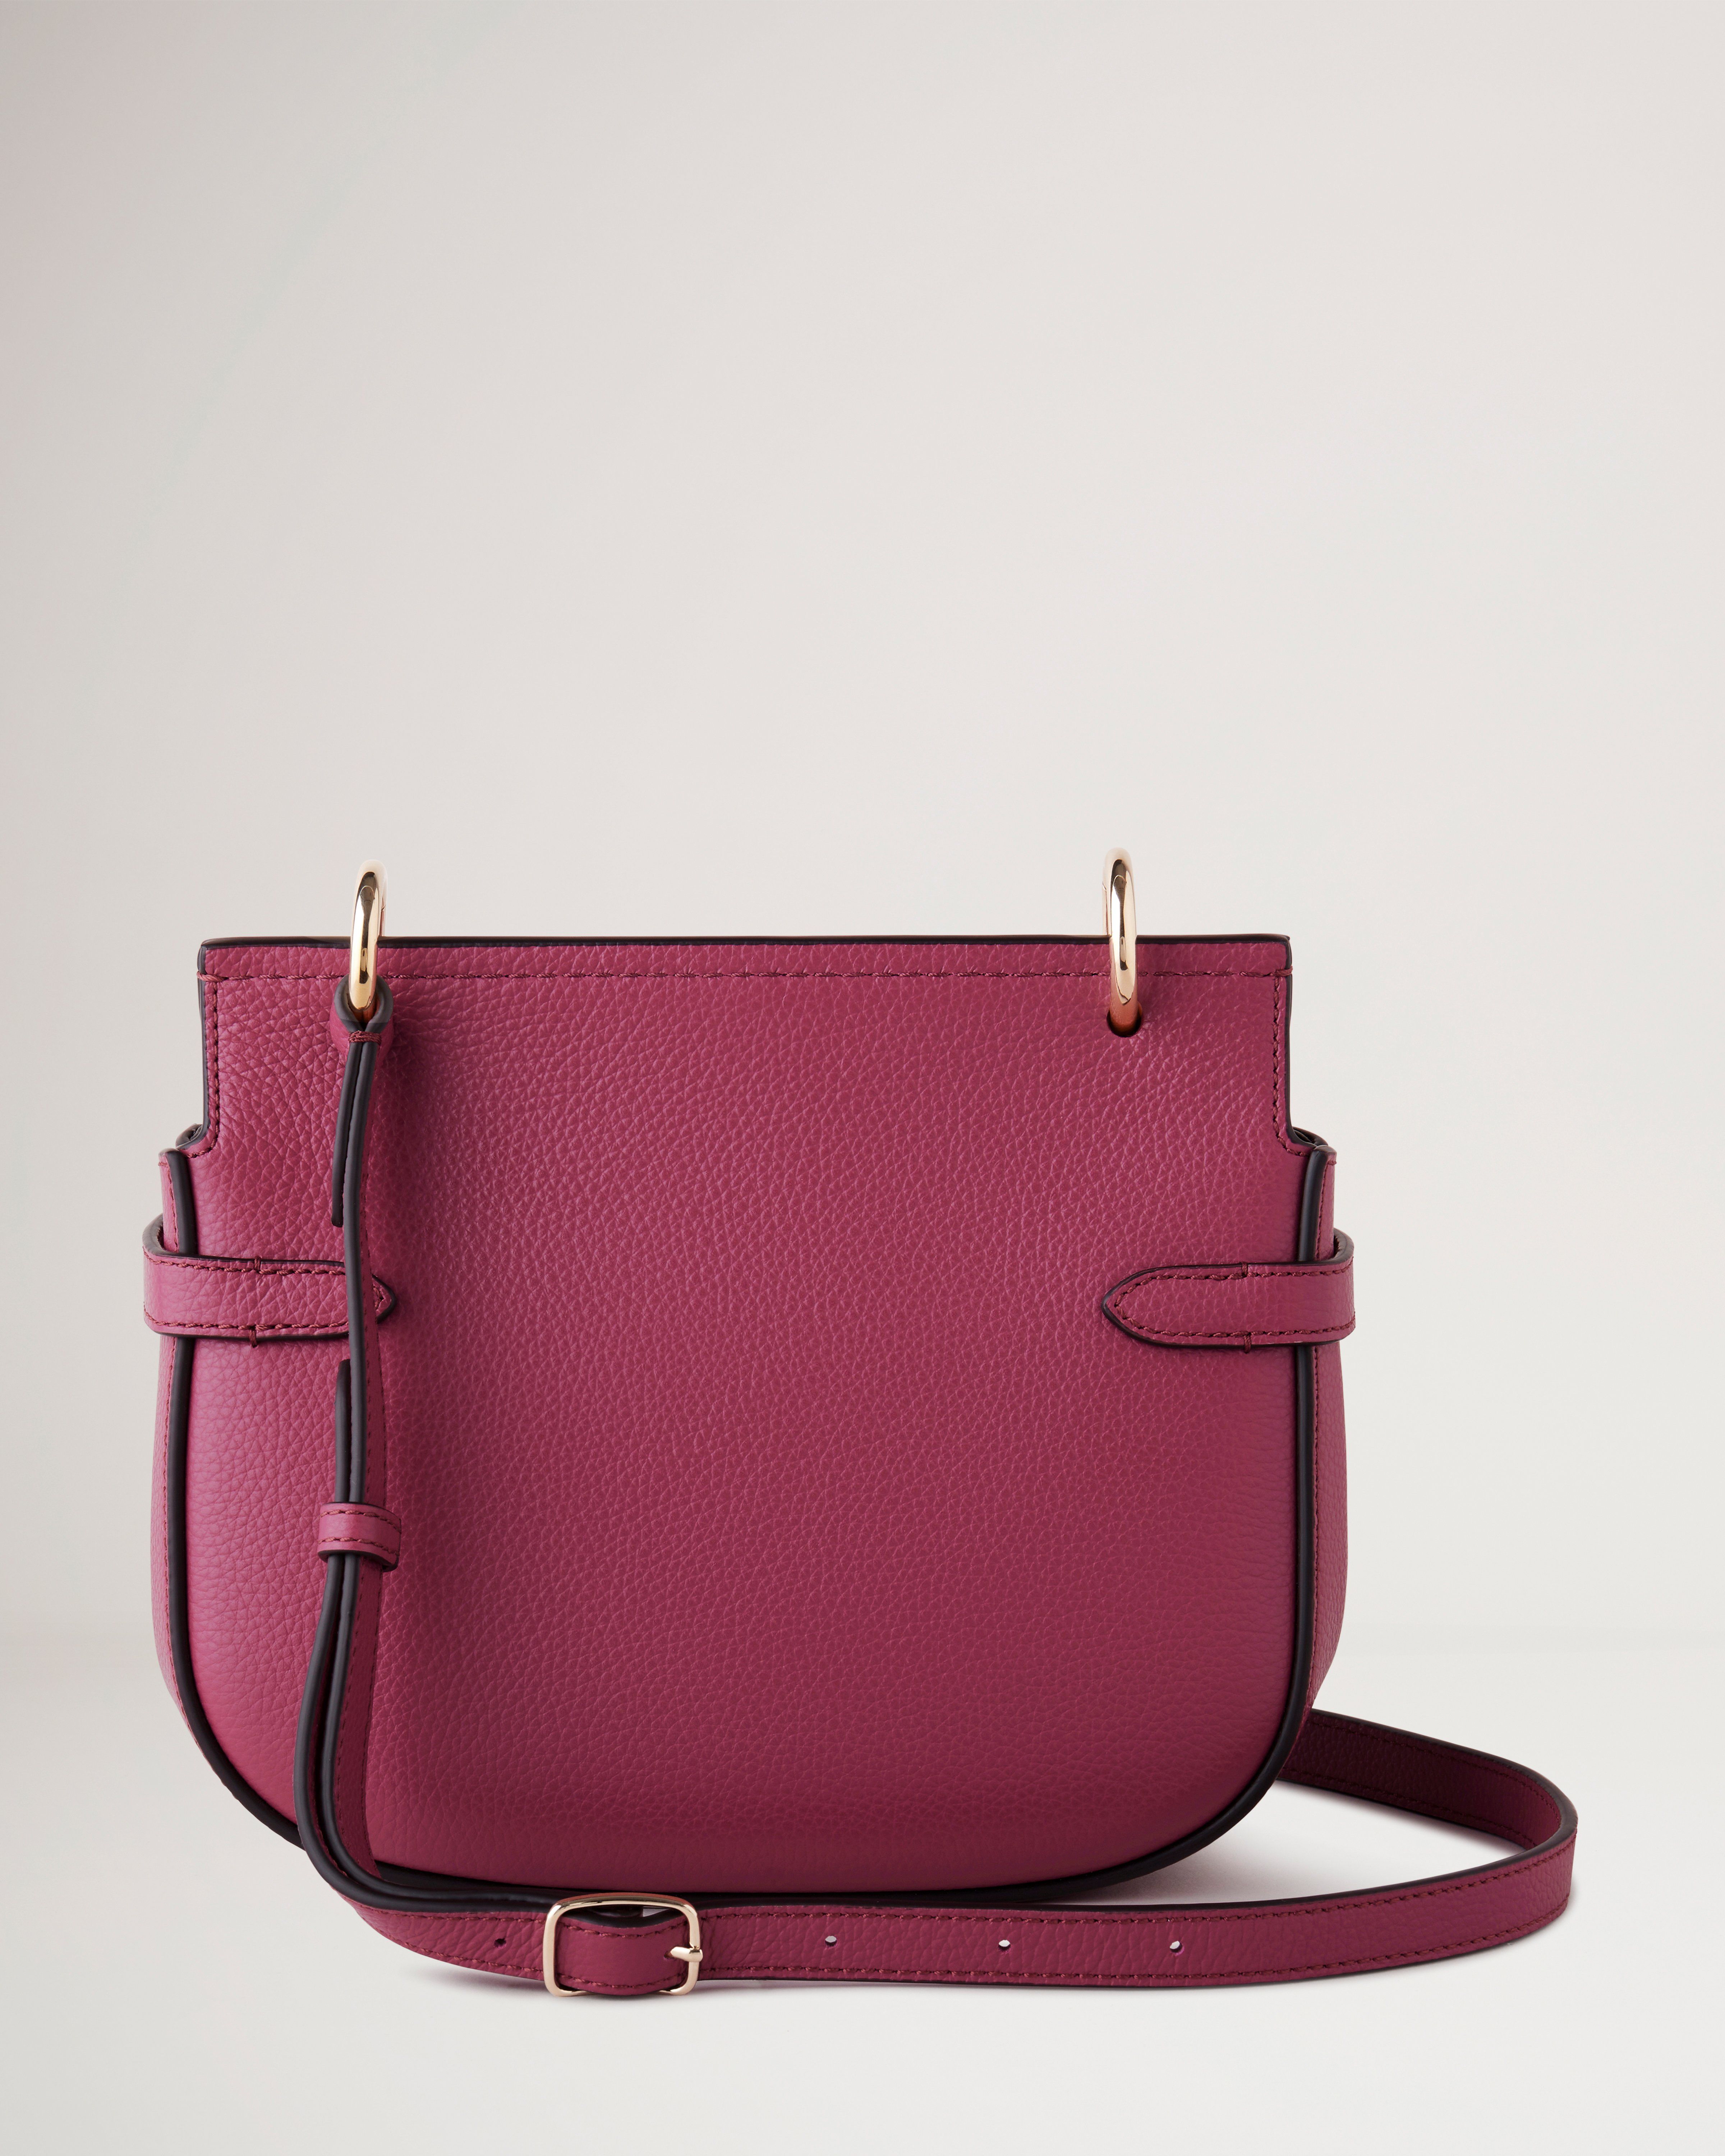 Mulberry Pimlico satchel bag - Purple